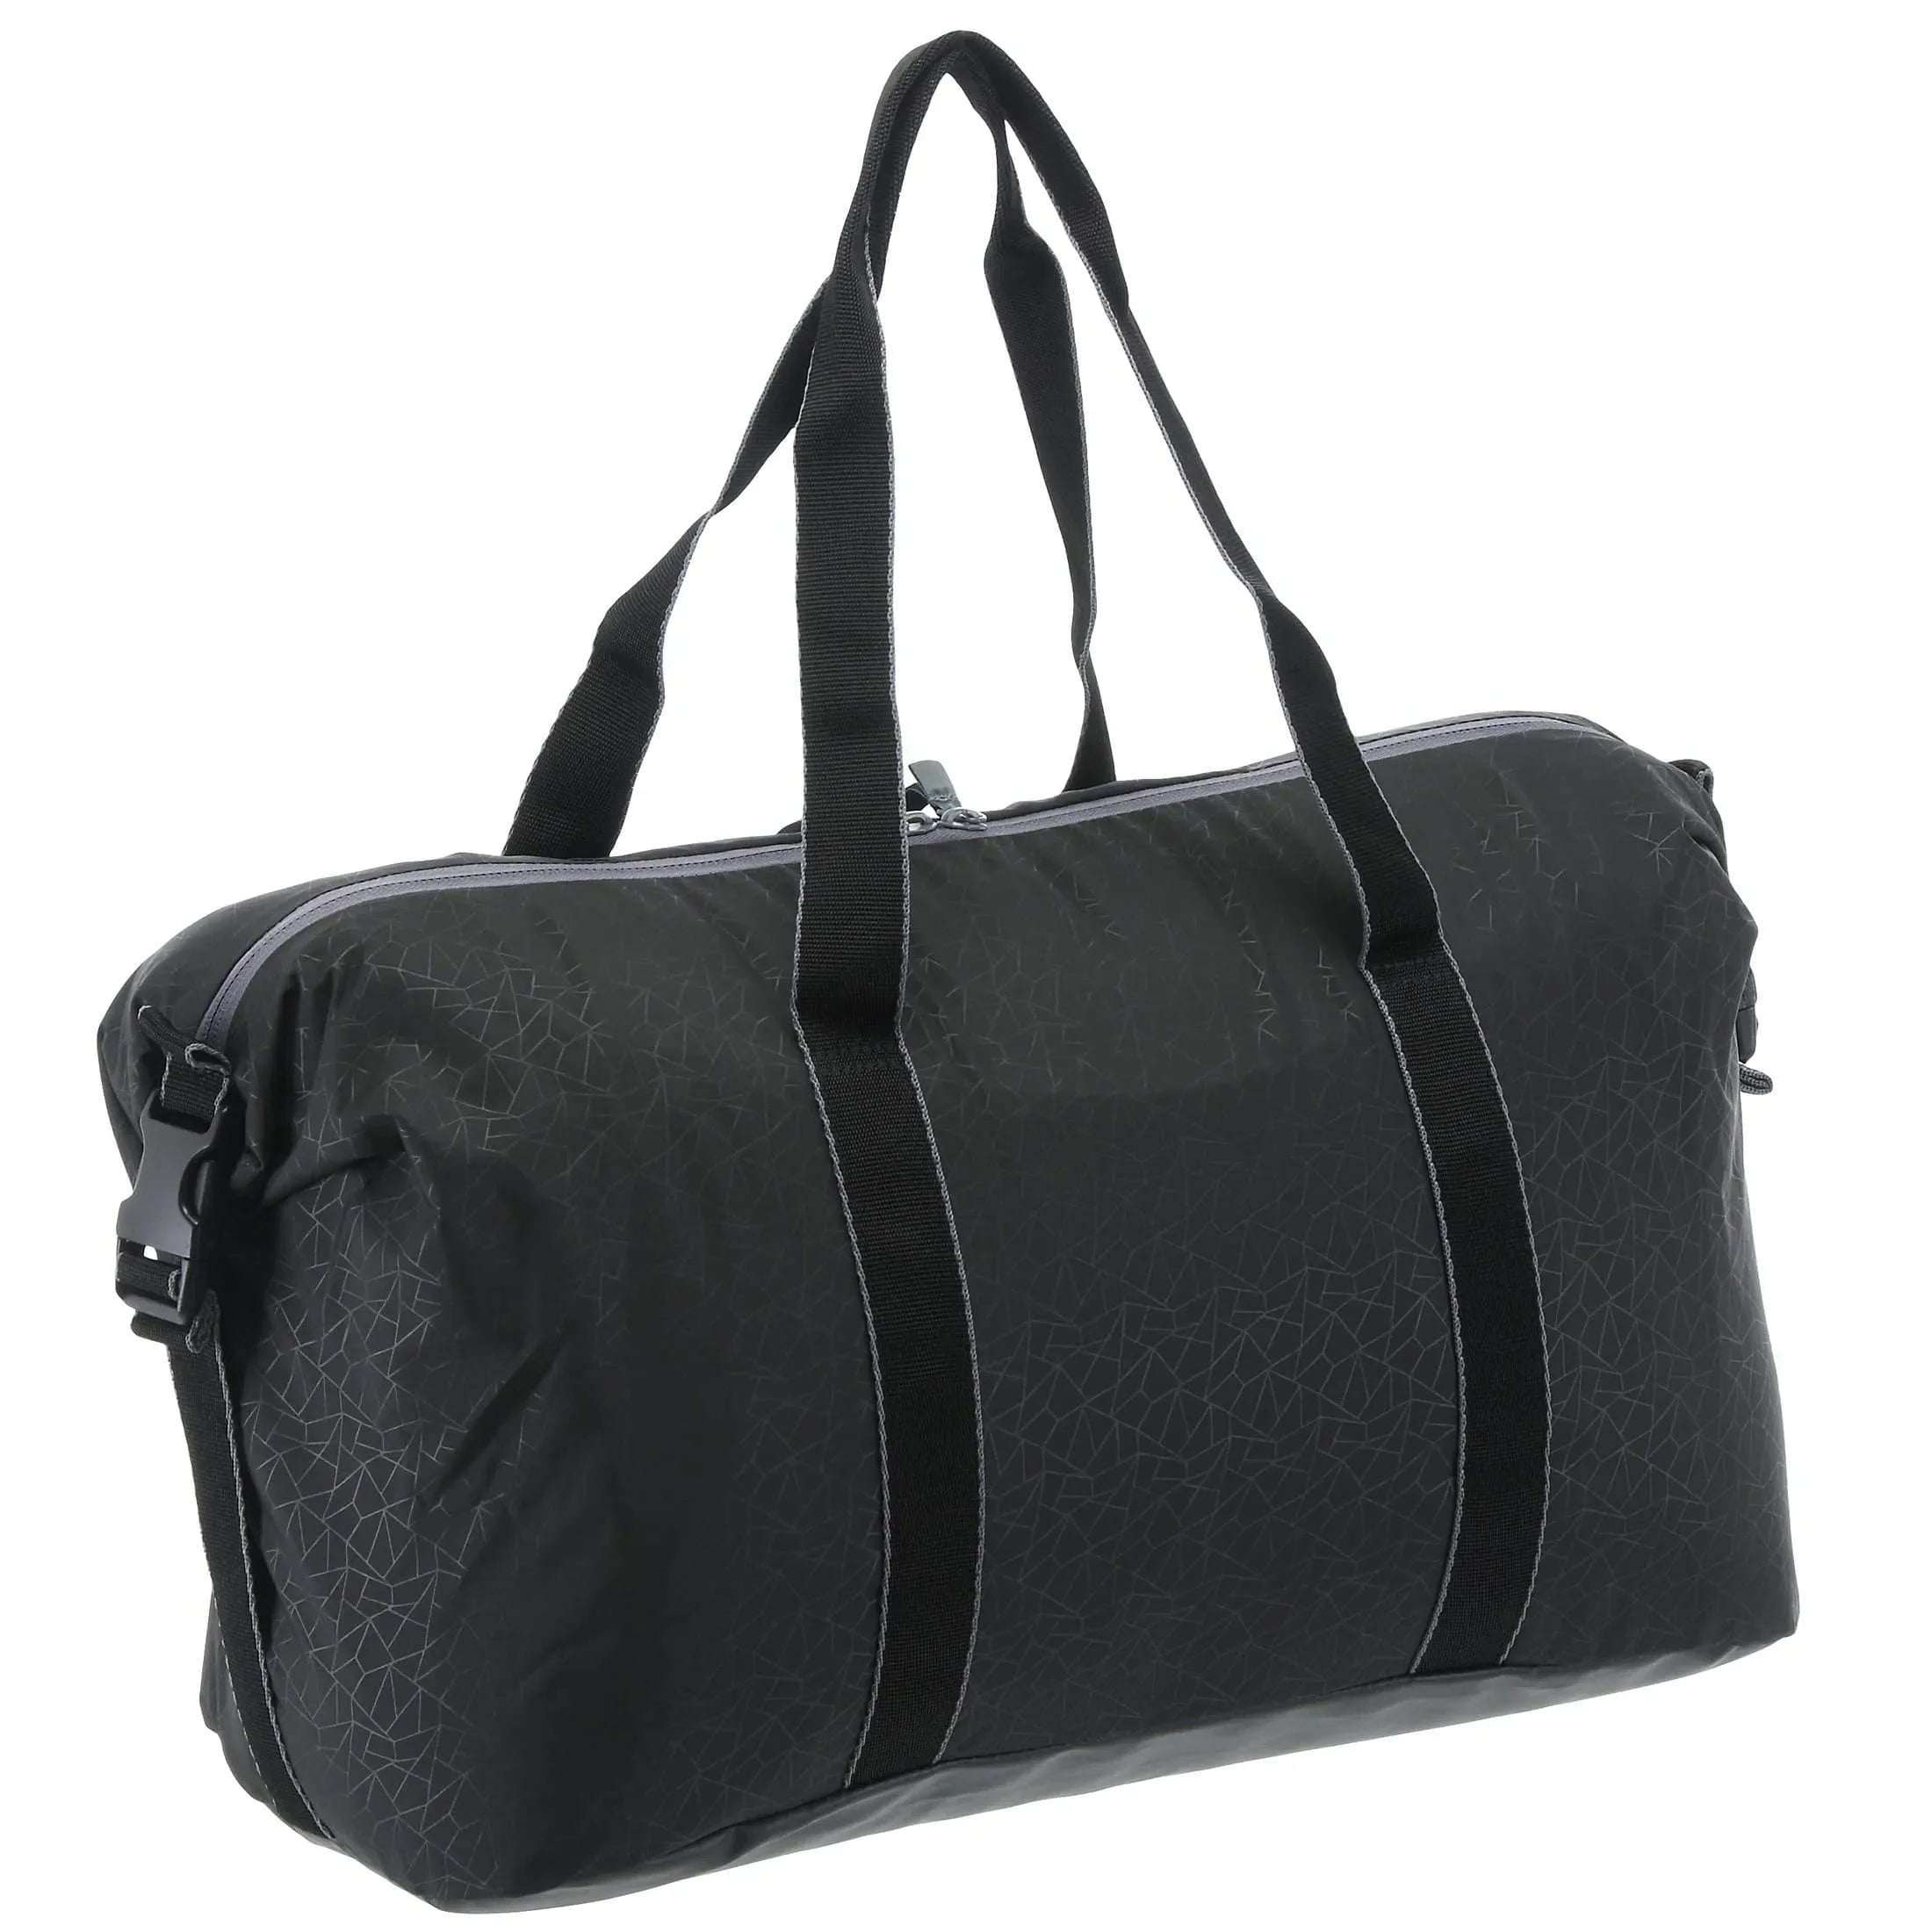 Puma Sports Fit AT Workout Bag sports bag 43 cm - puma black-quiet shade